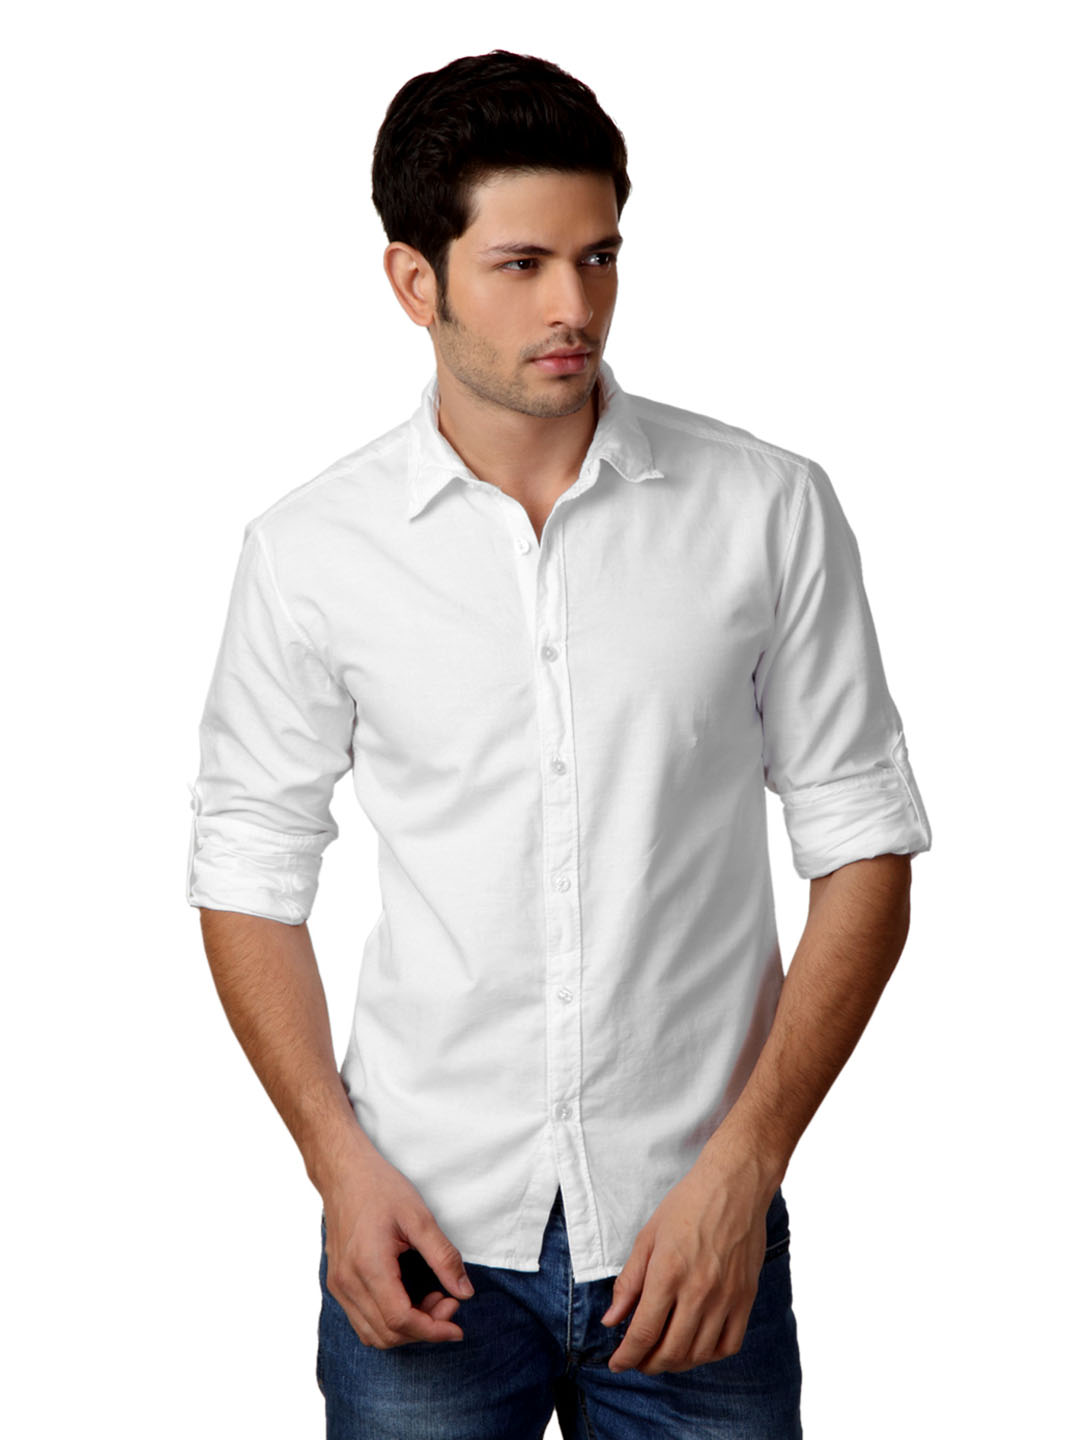 White Dress Shirts For Men